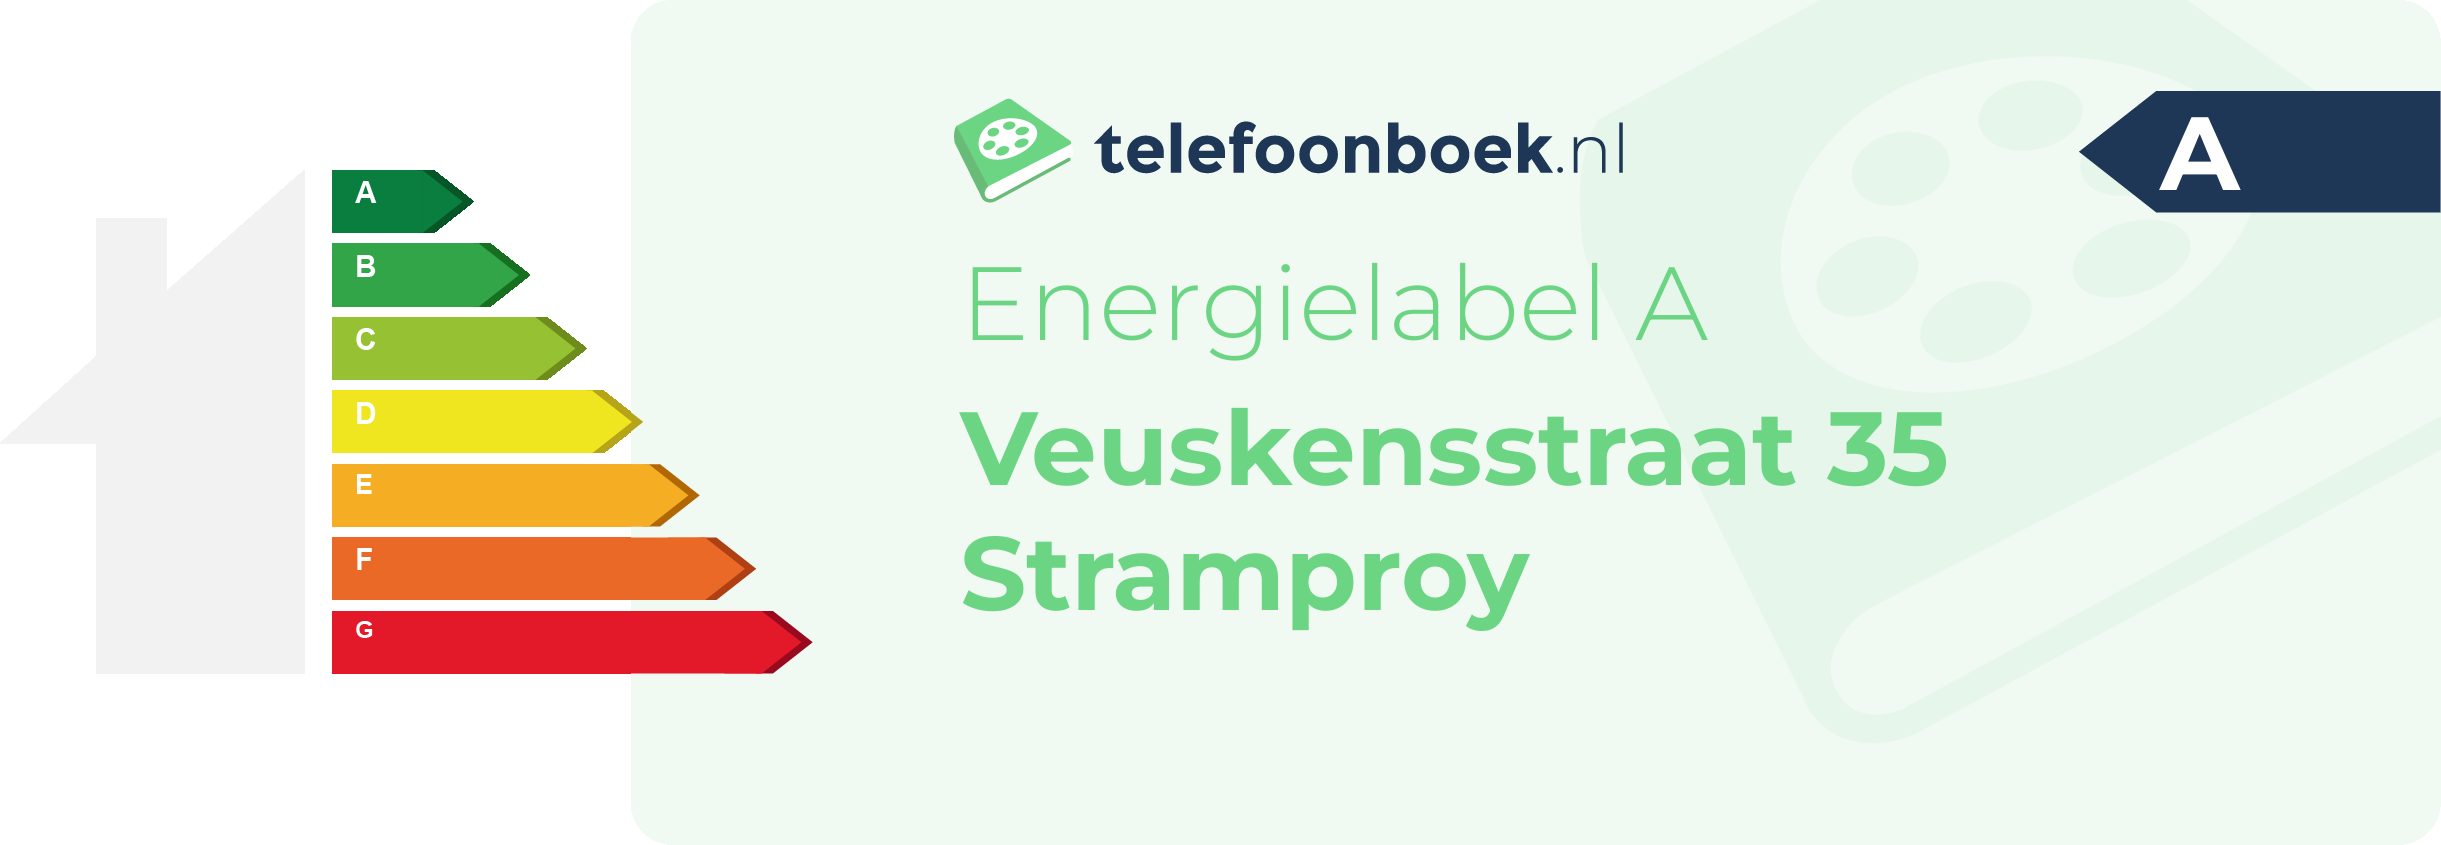 Energielabel Veuskensstraat 35 Stramproy